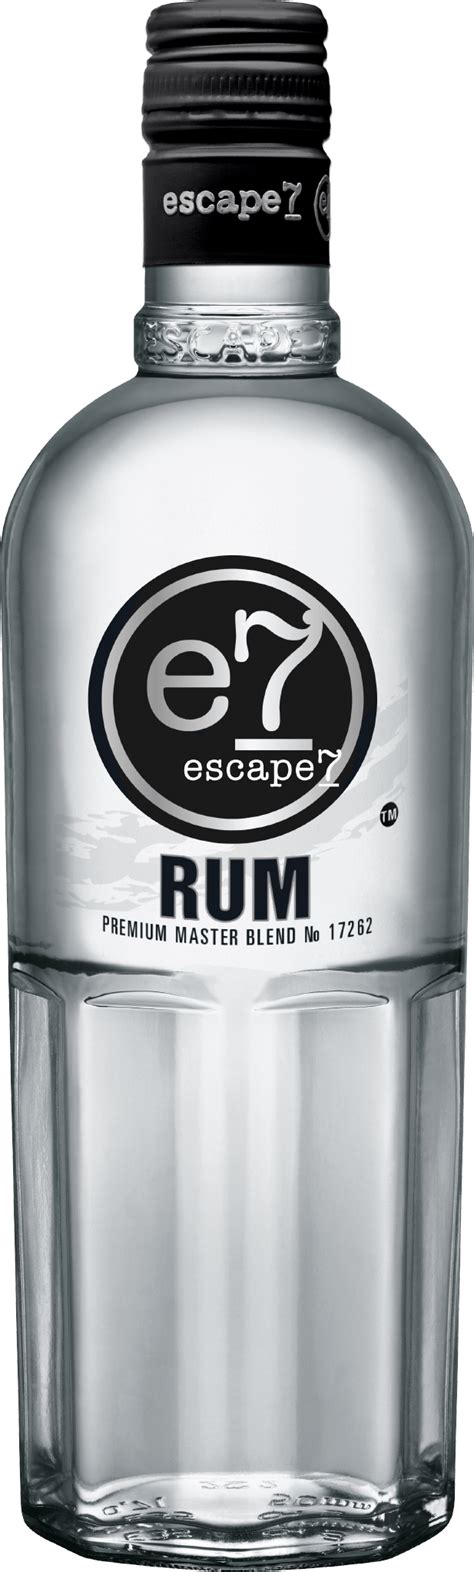 escape rum weiss cl